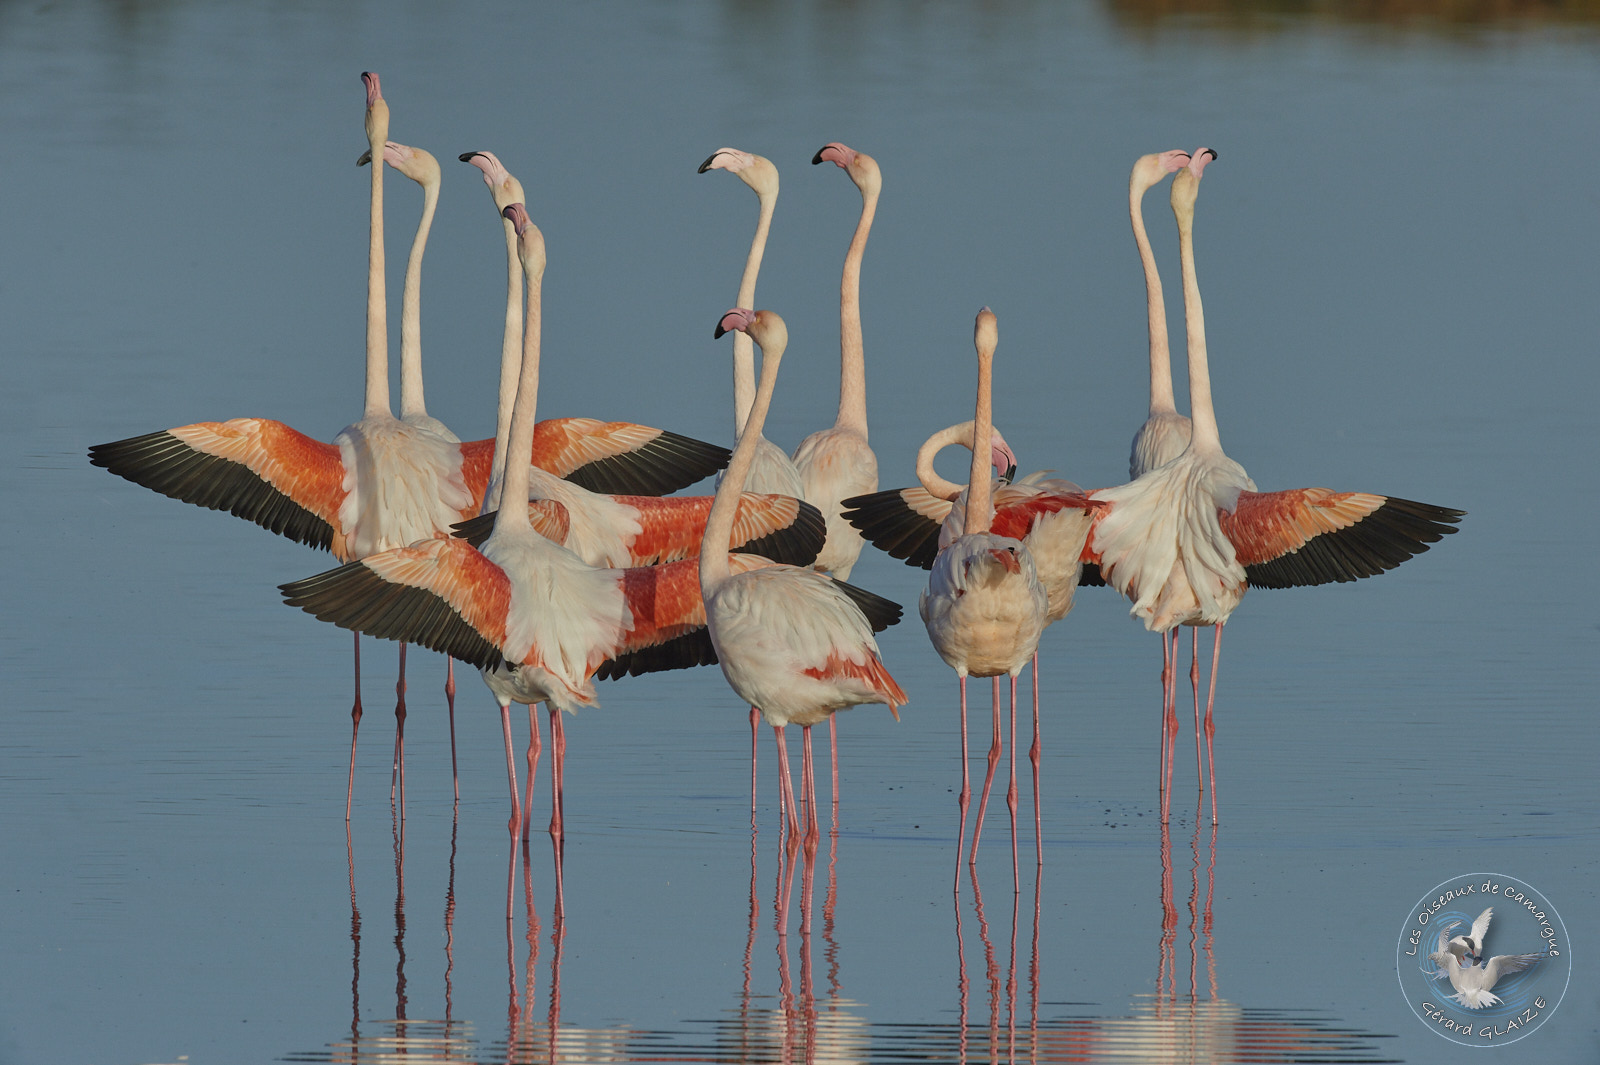 Parade des Flamants roses - Greater Flamingo Parade